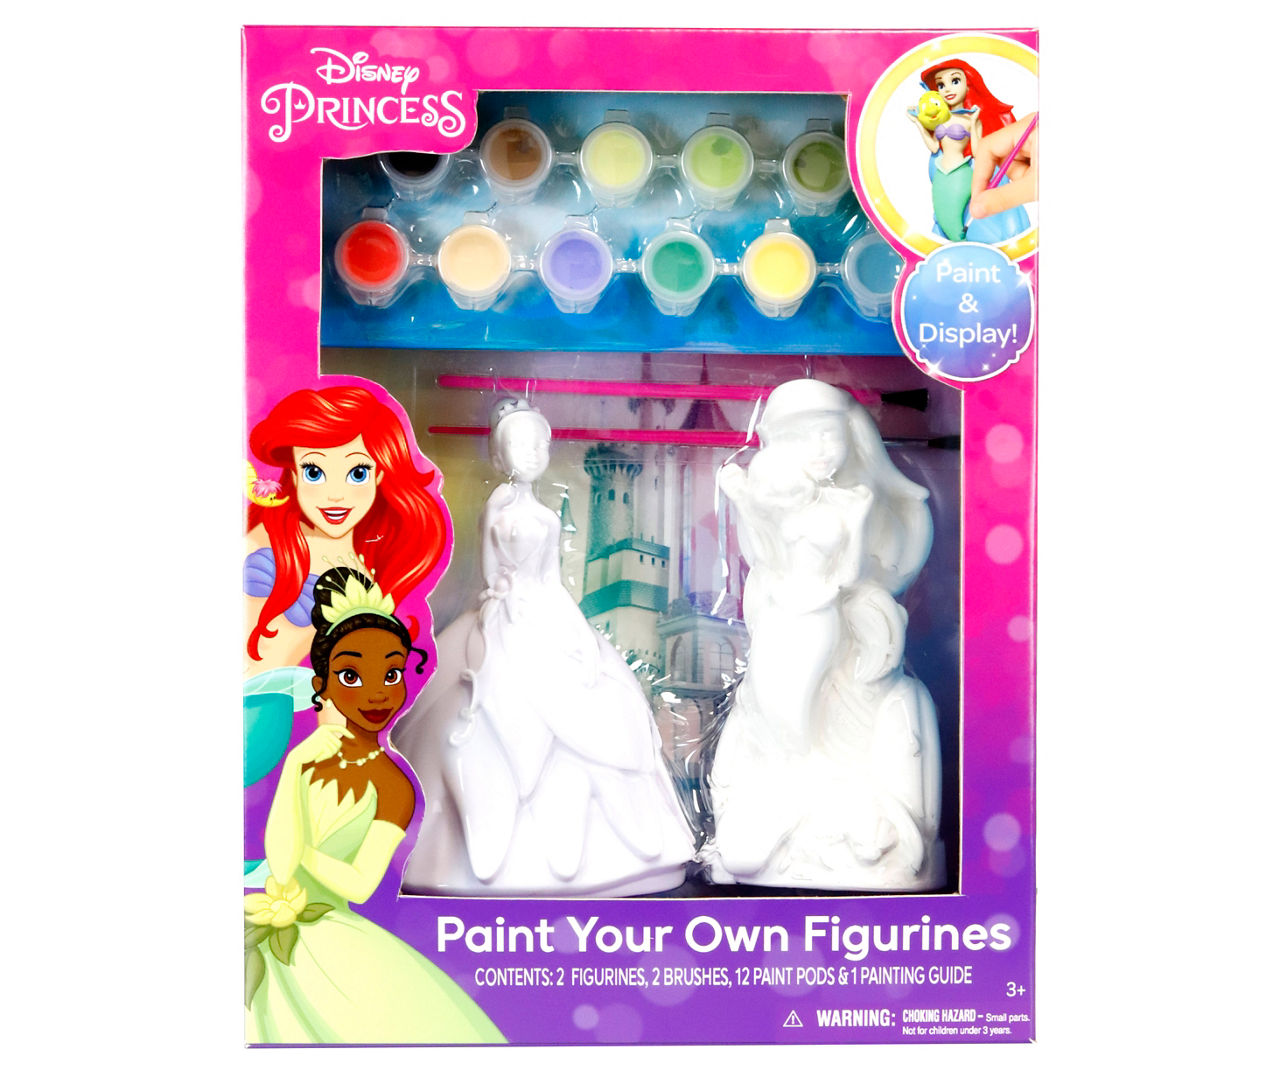 Disney Princess Paint Your Own Figurines, Hobby Lobby